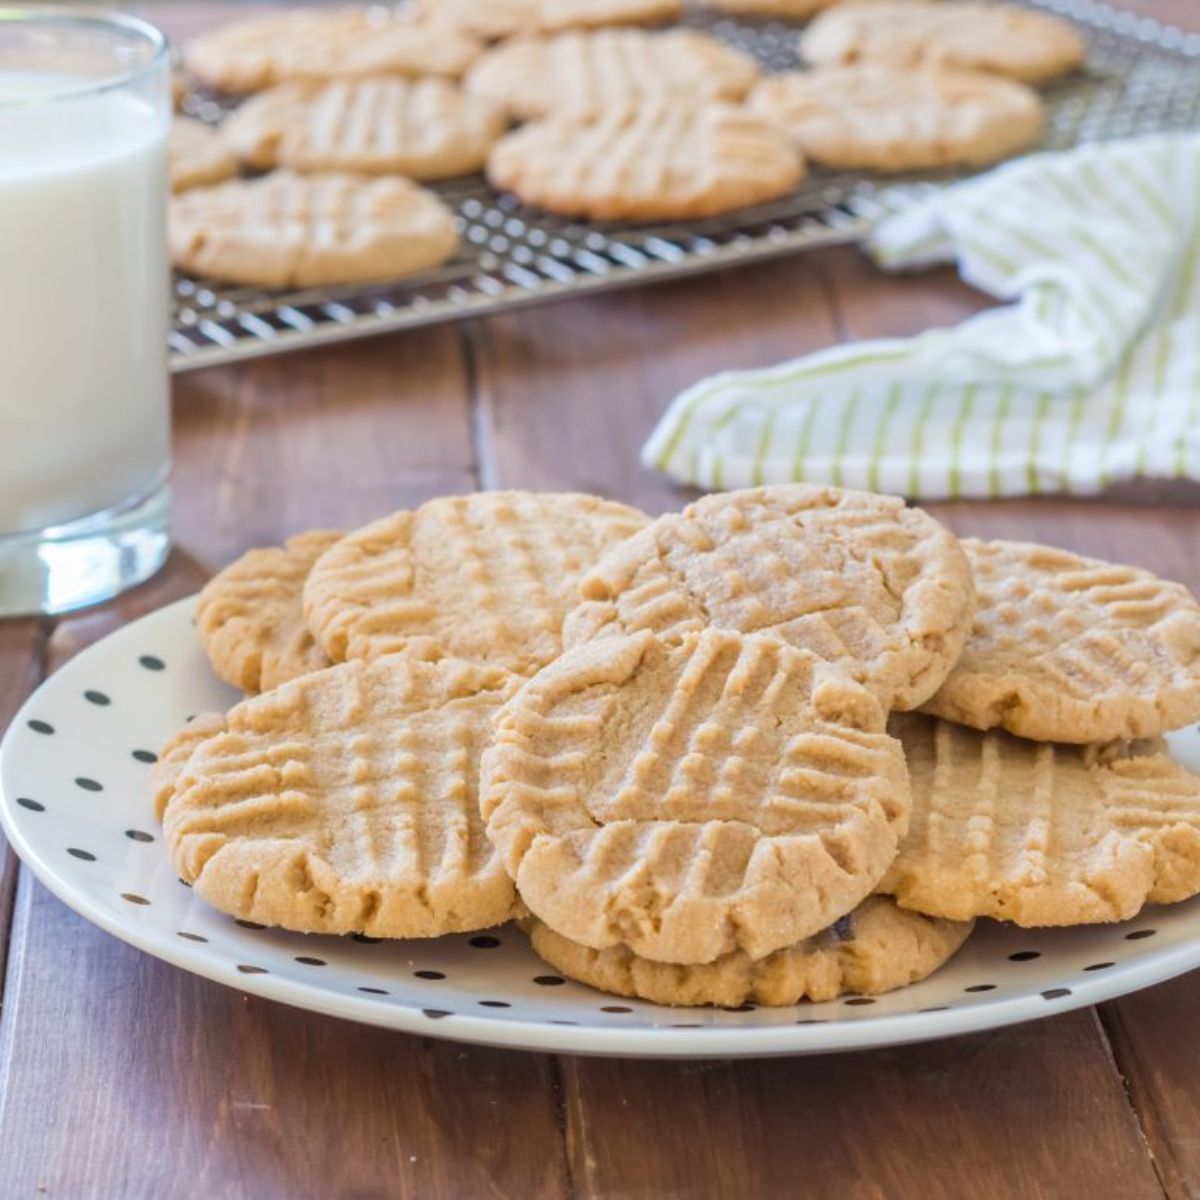 Crispy Gluten-Free Peanut Butter Cookies on a plate.